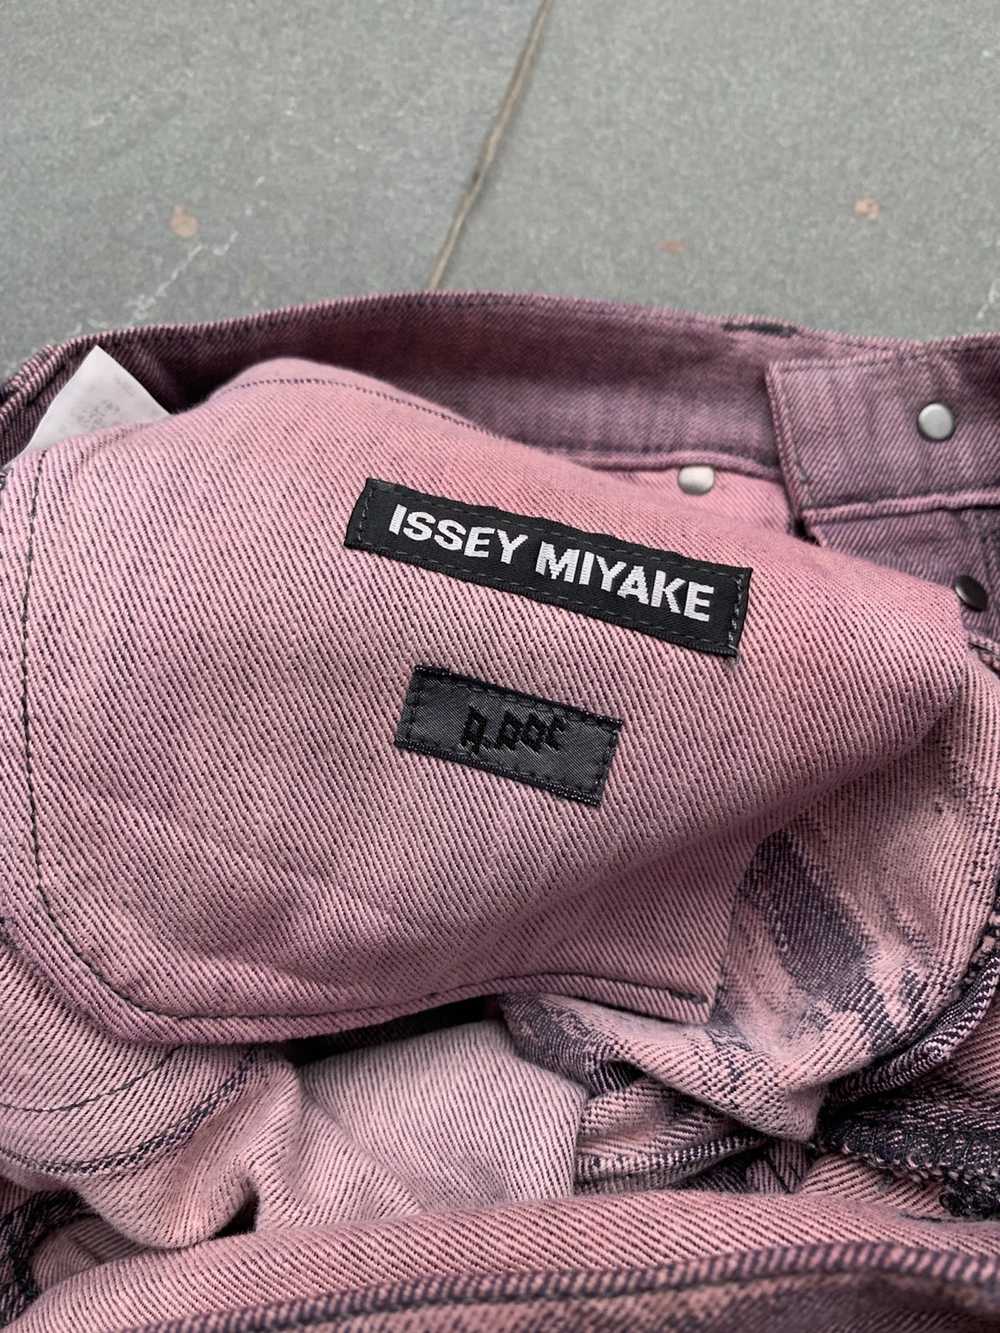 Issey Miyake APOC Galaxy Purple Denim Jeans - image 9